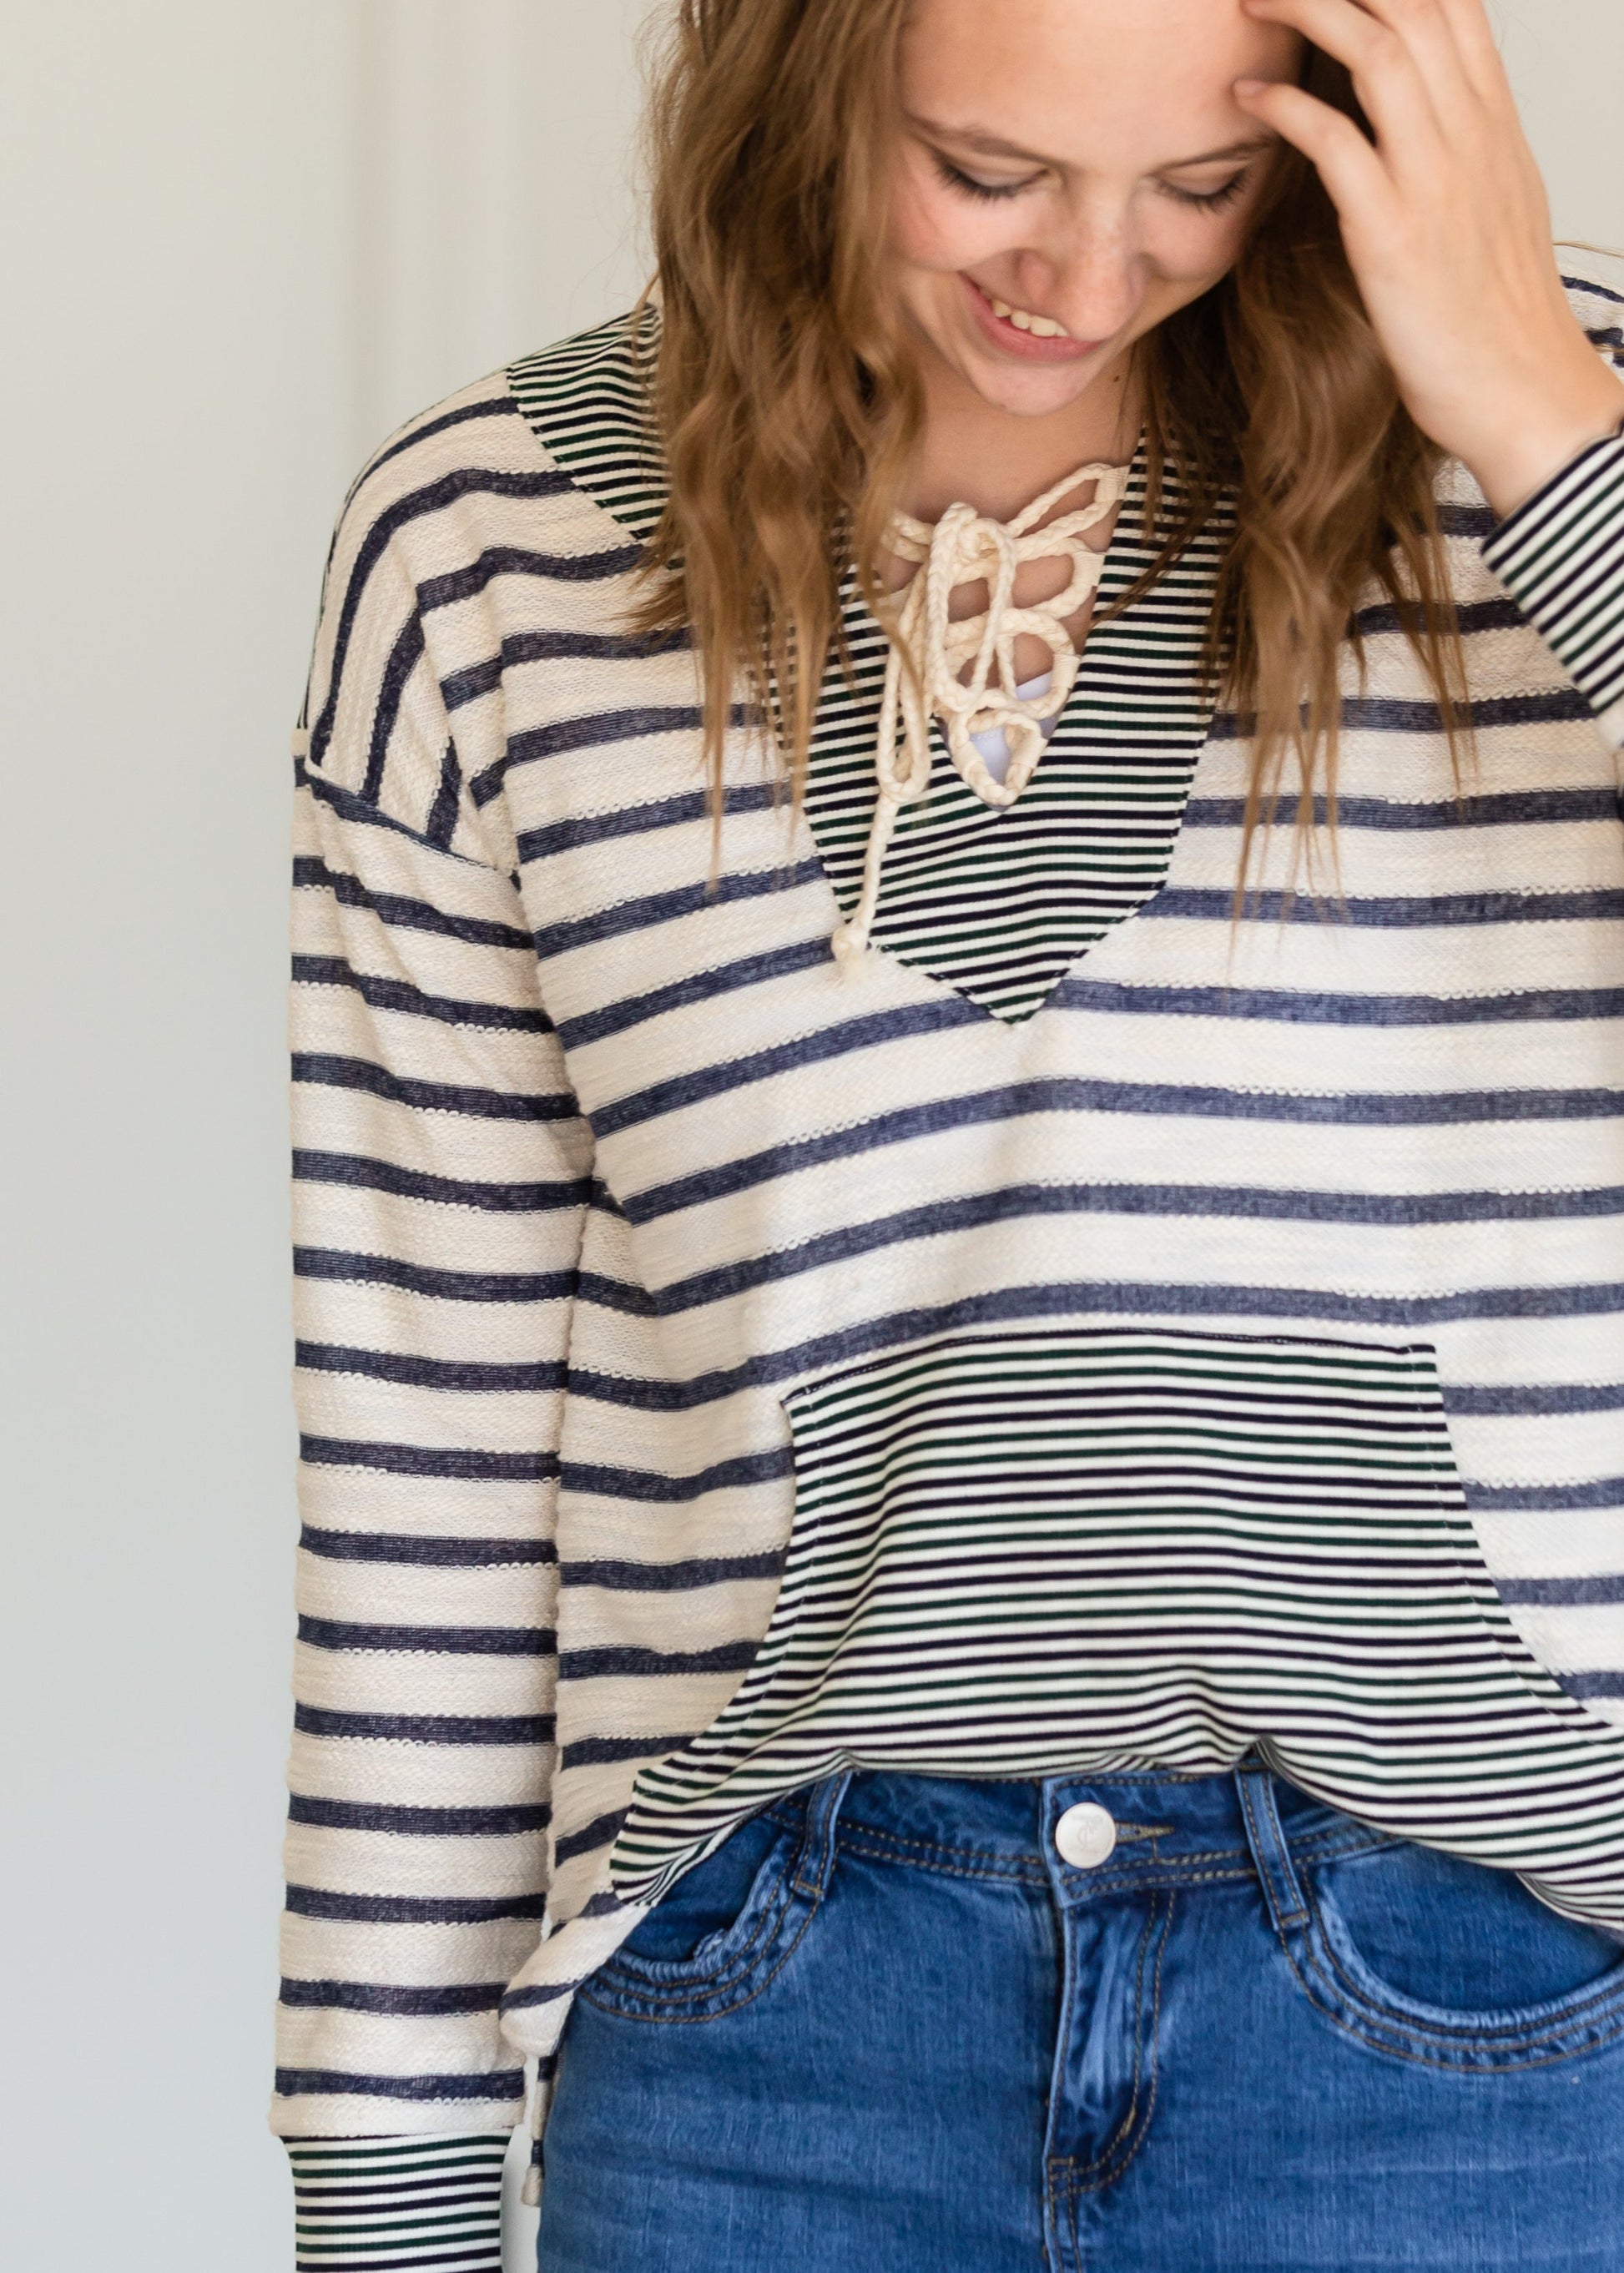 Mixed Stripe Lace Up Hooded Sweatshirt - FINAL SALE Tops